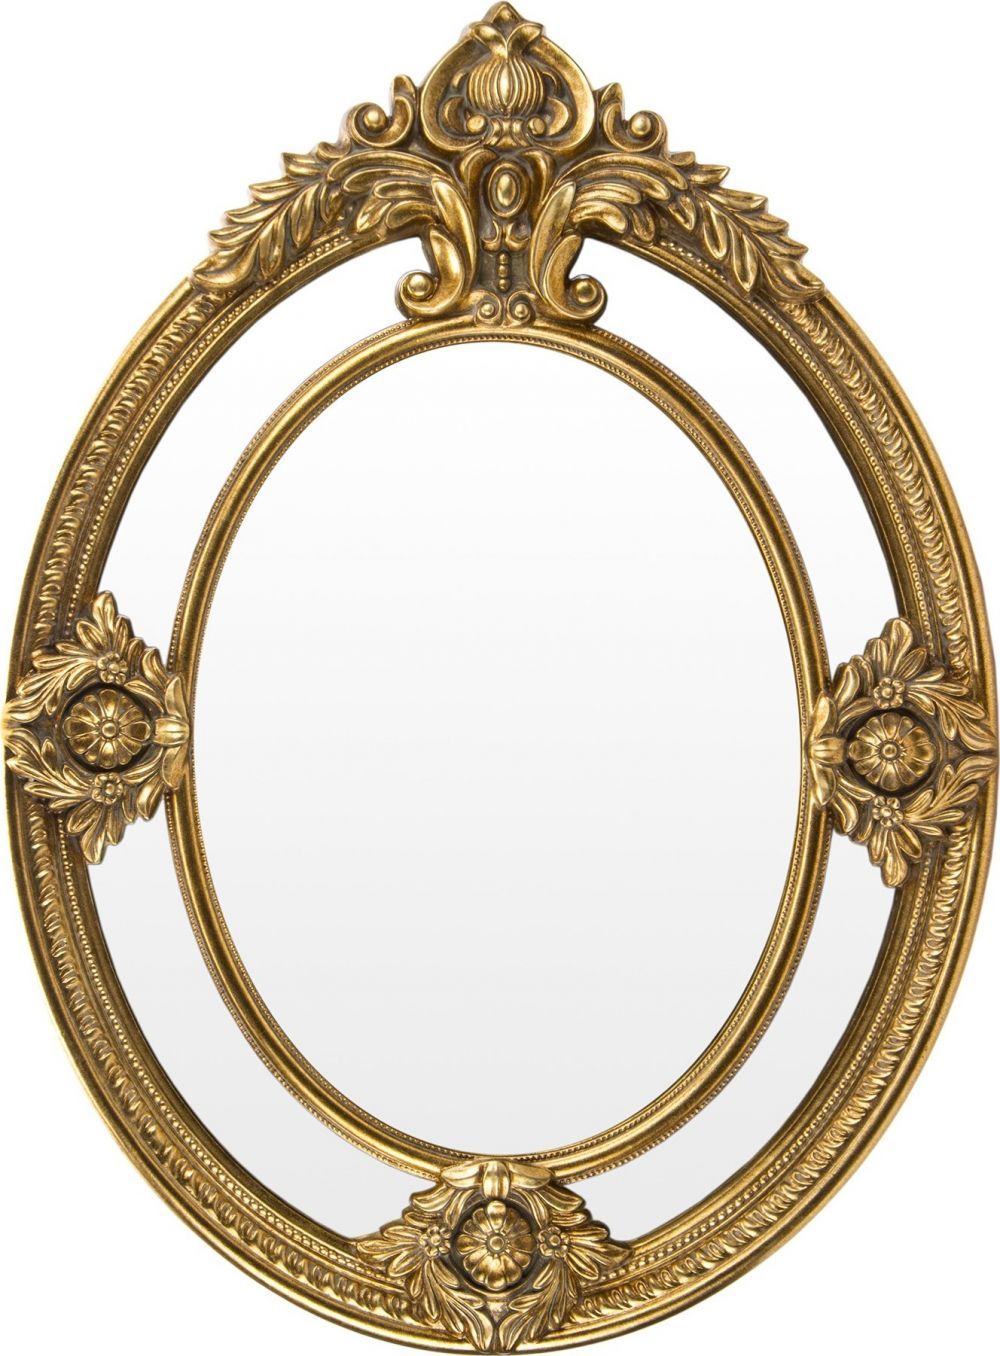 Oválné zrcadlo s ornamenty 138061 Mdum - M DUM.cz